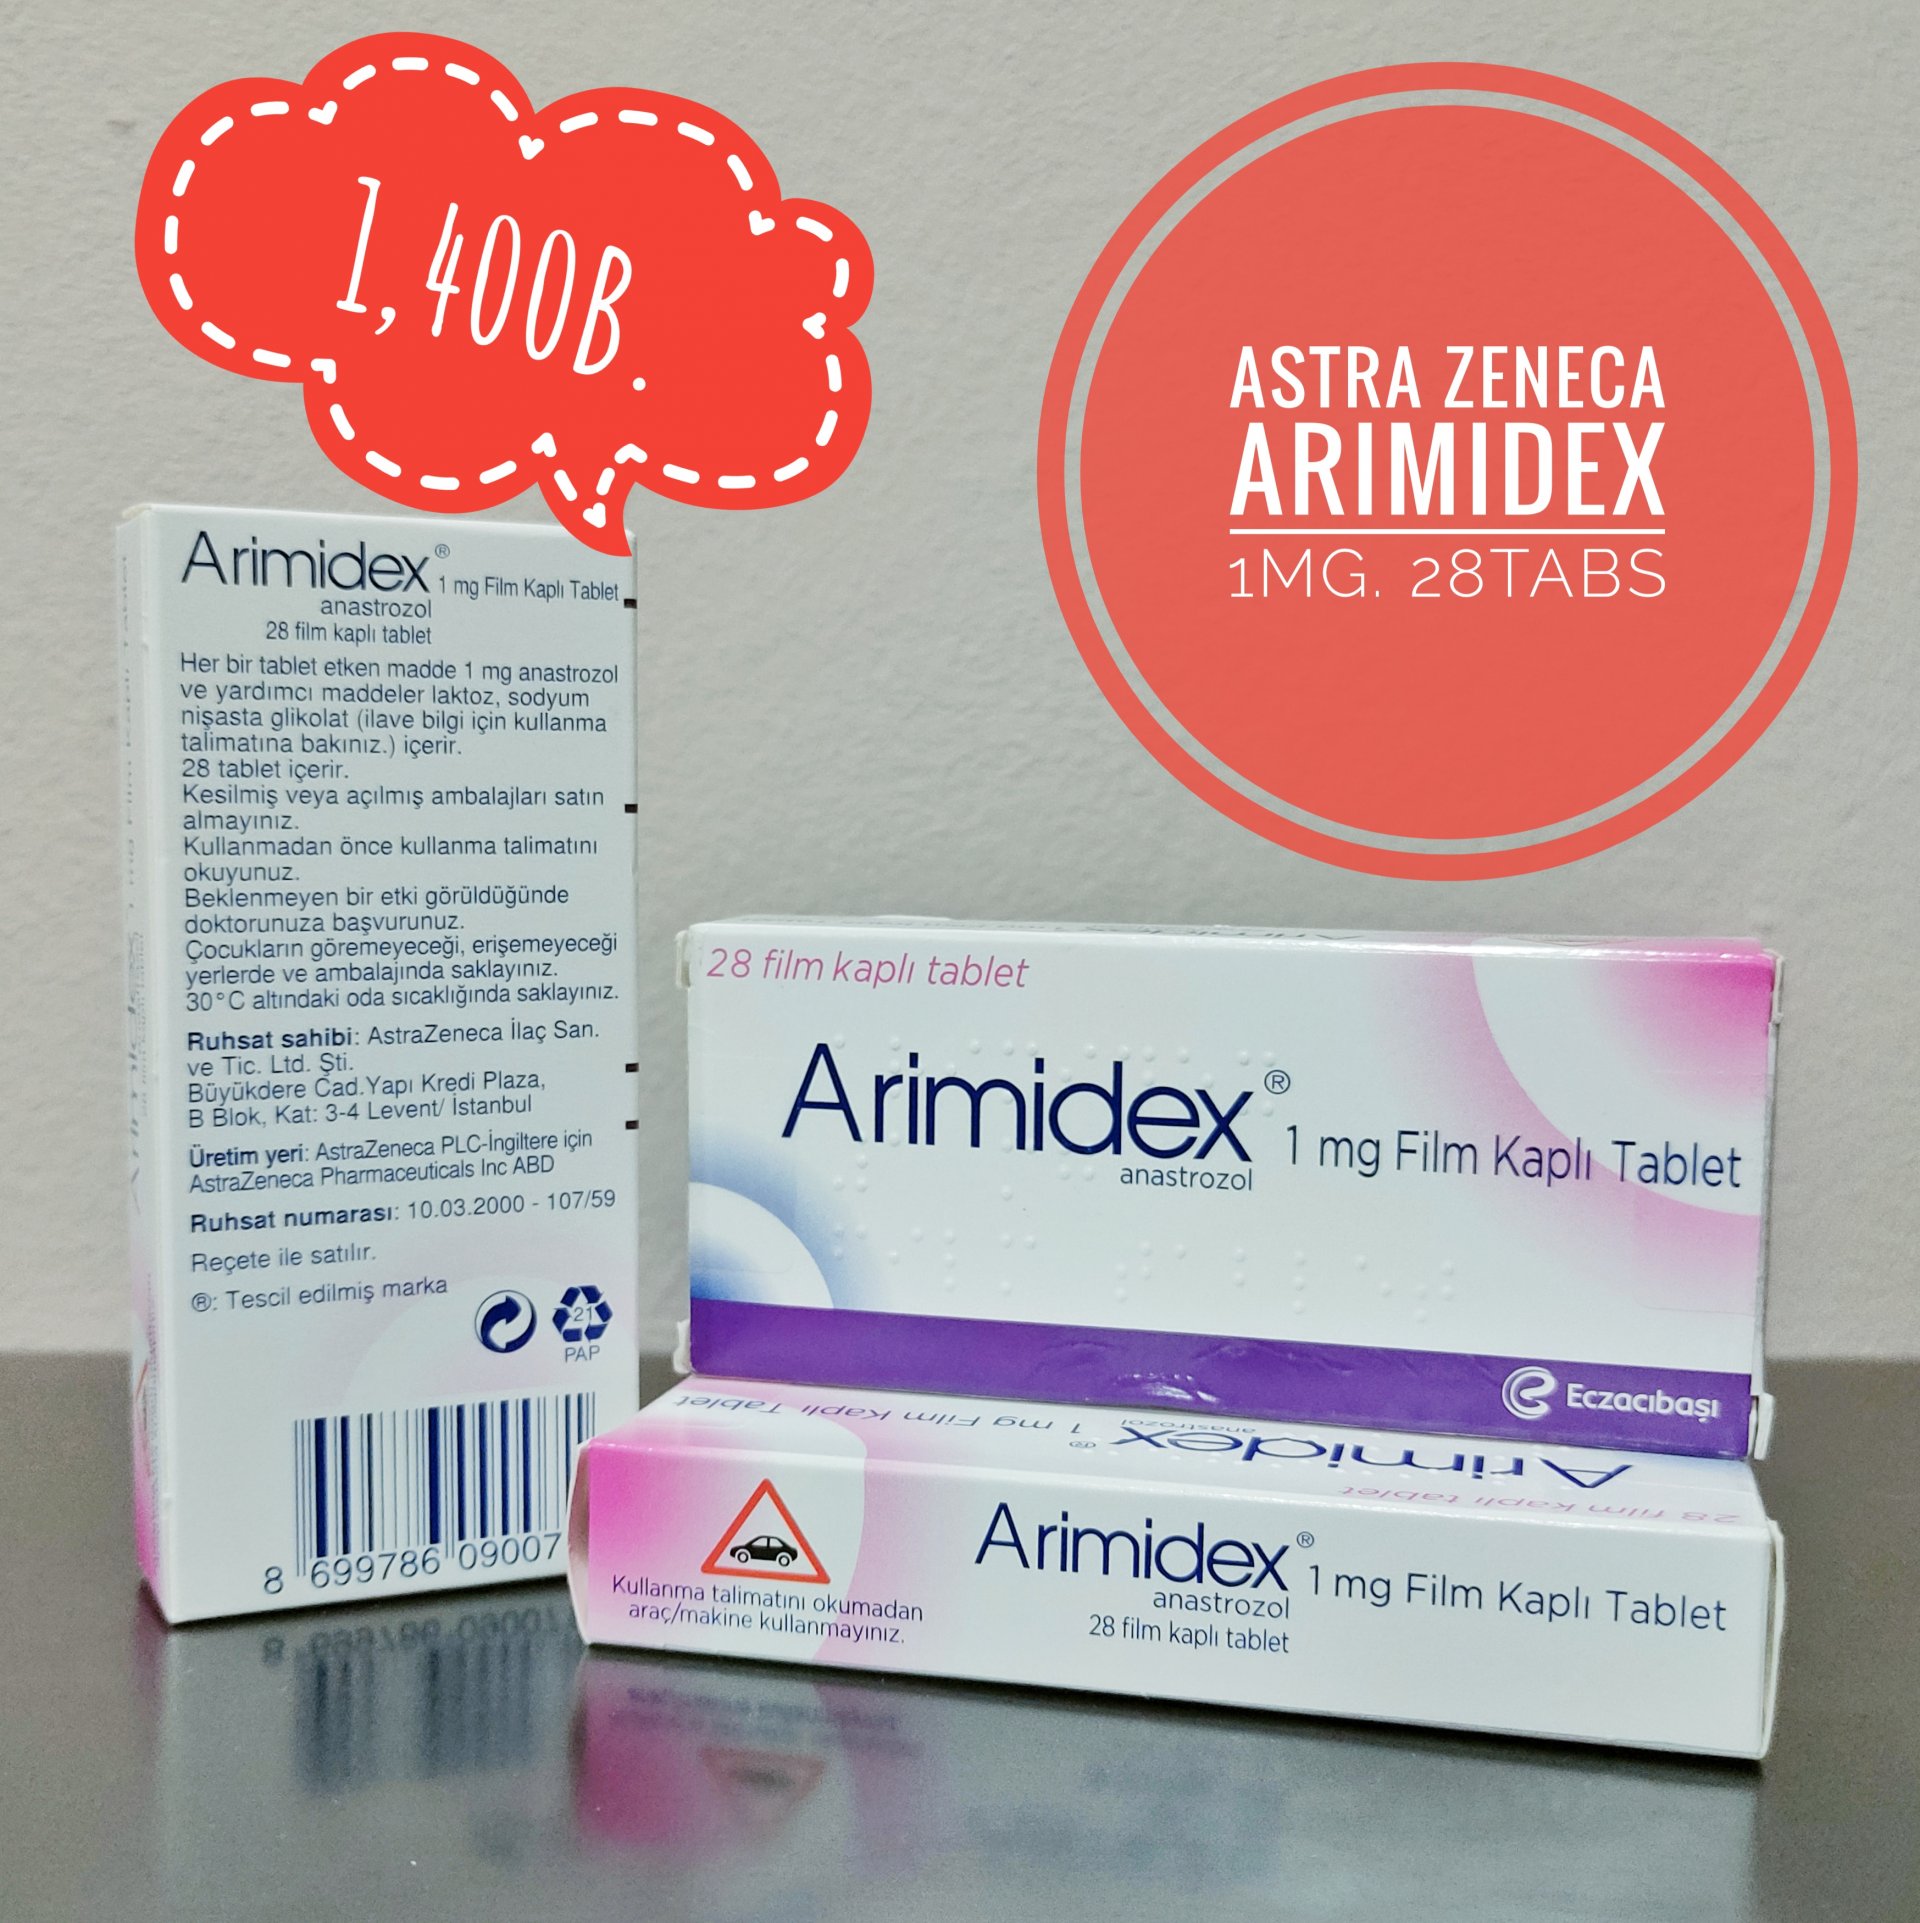 Astra Zeneca Arimidex 1 mg. 28 เม็ด (tablets)